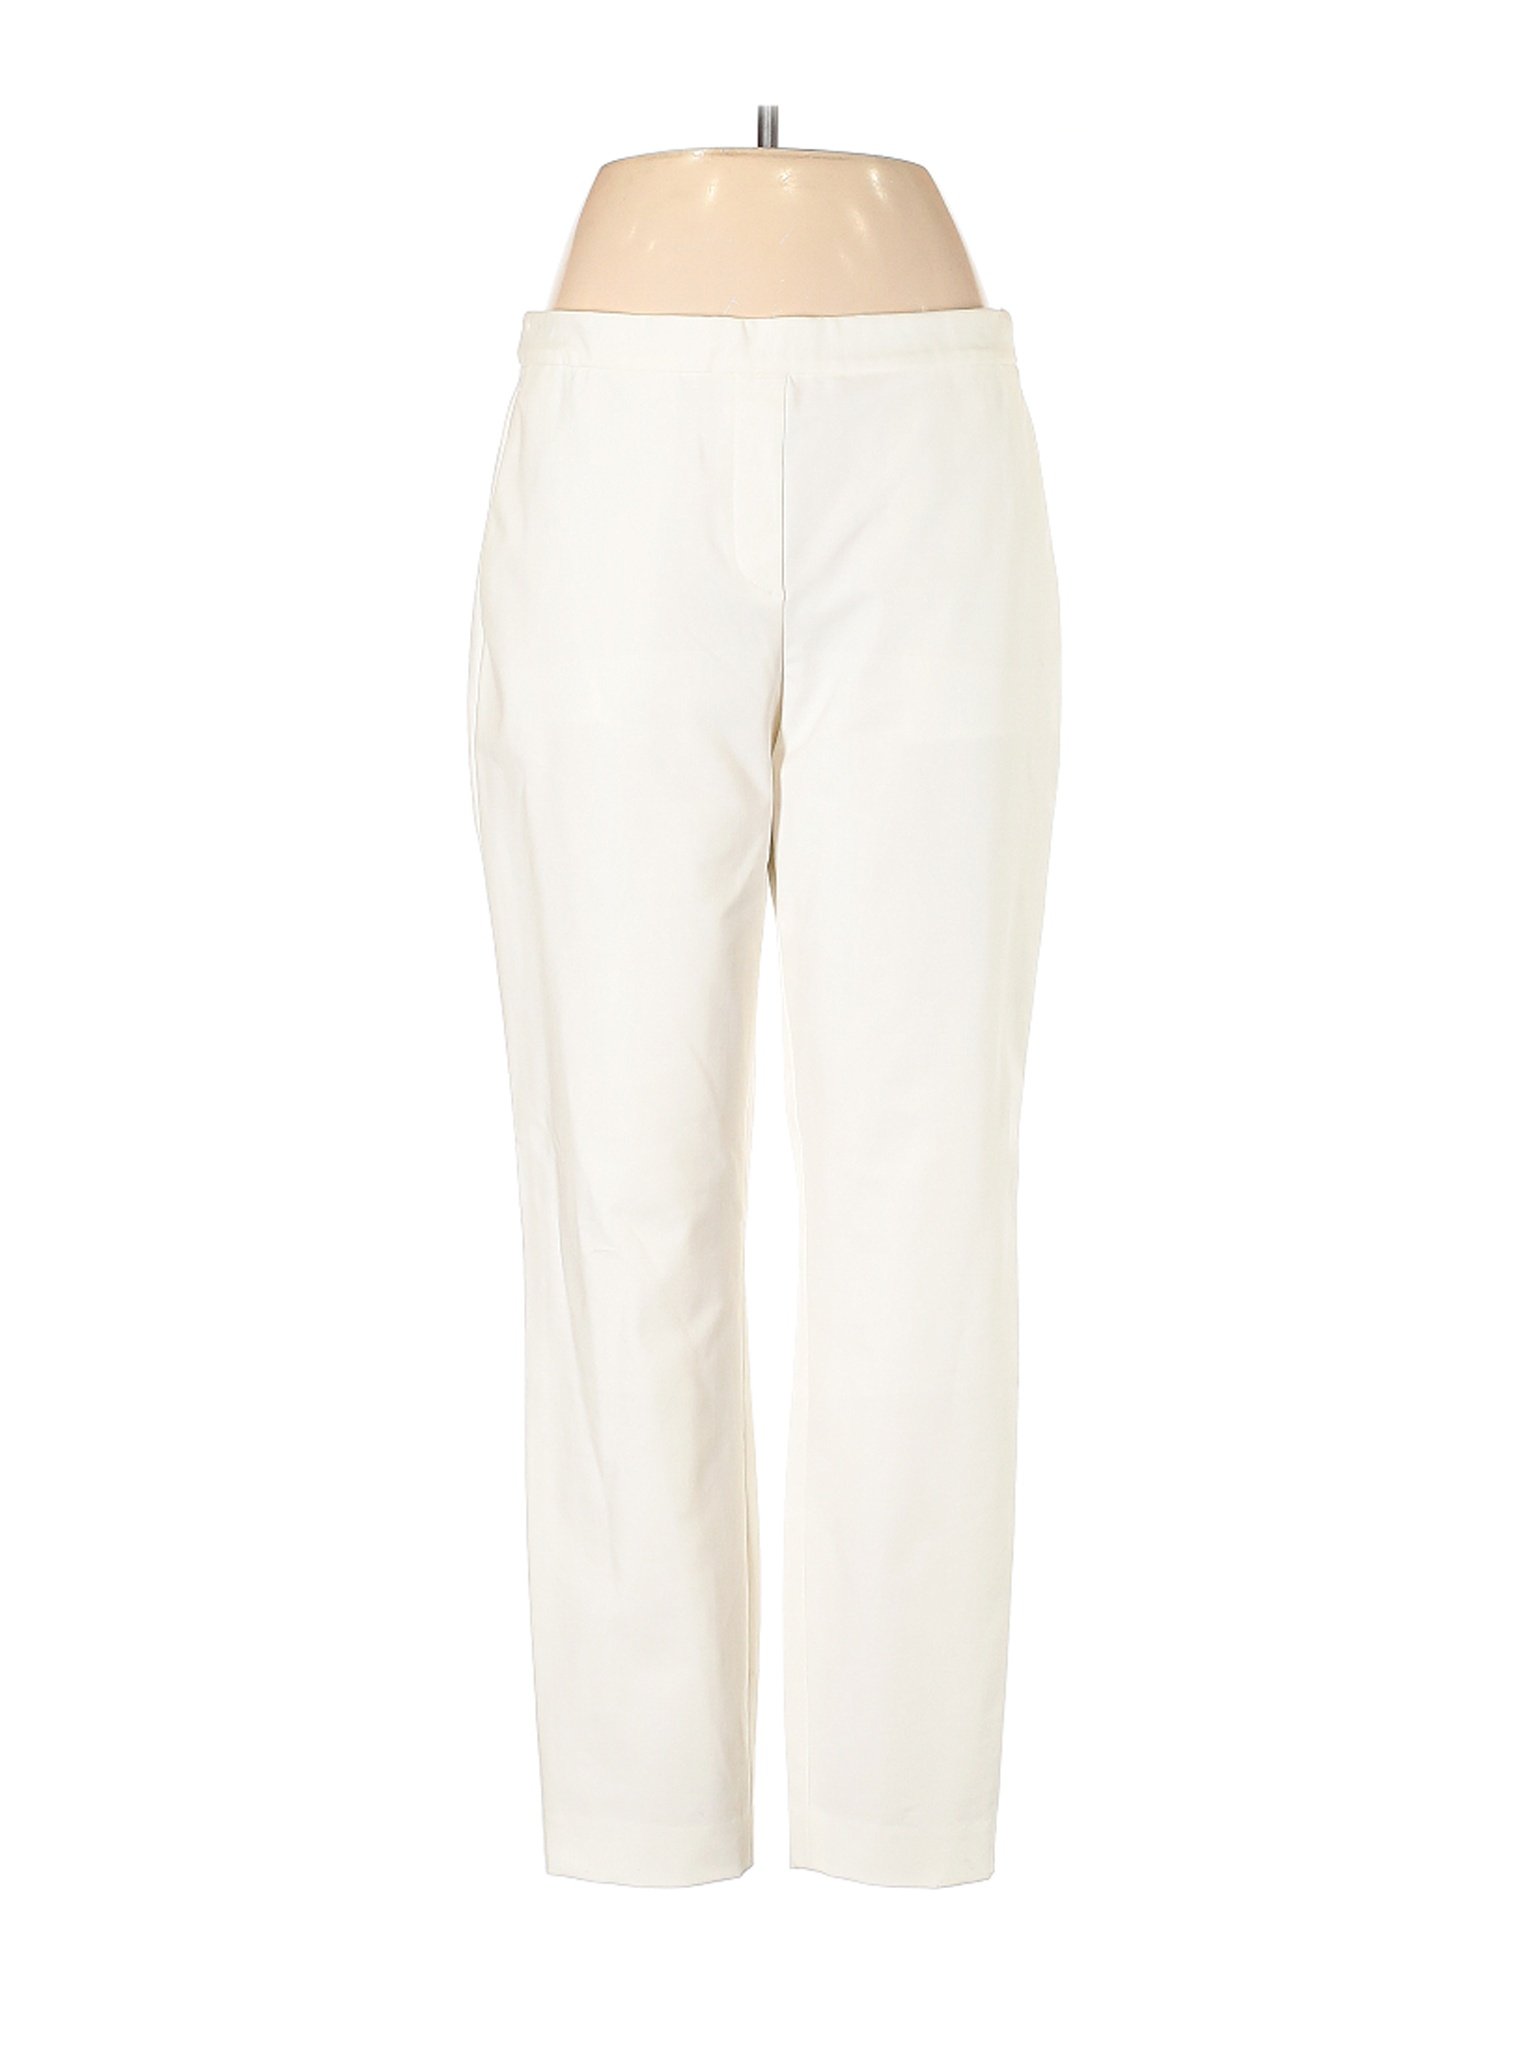 Theory Women White Dress Pants 8 | eBay